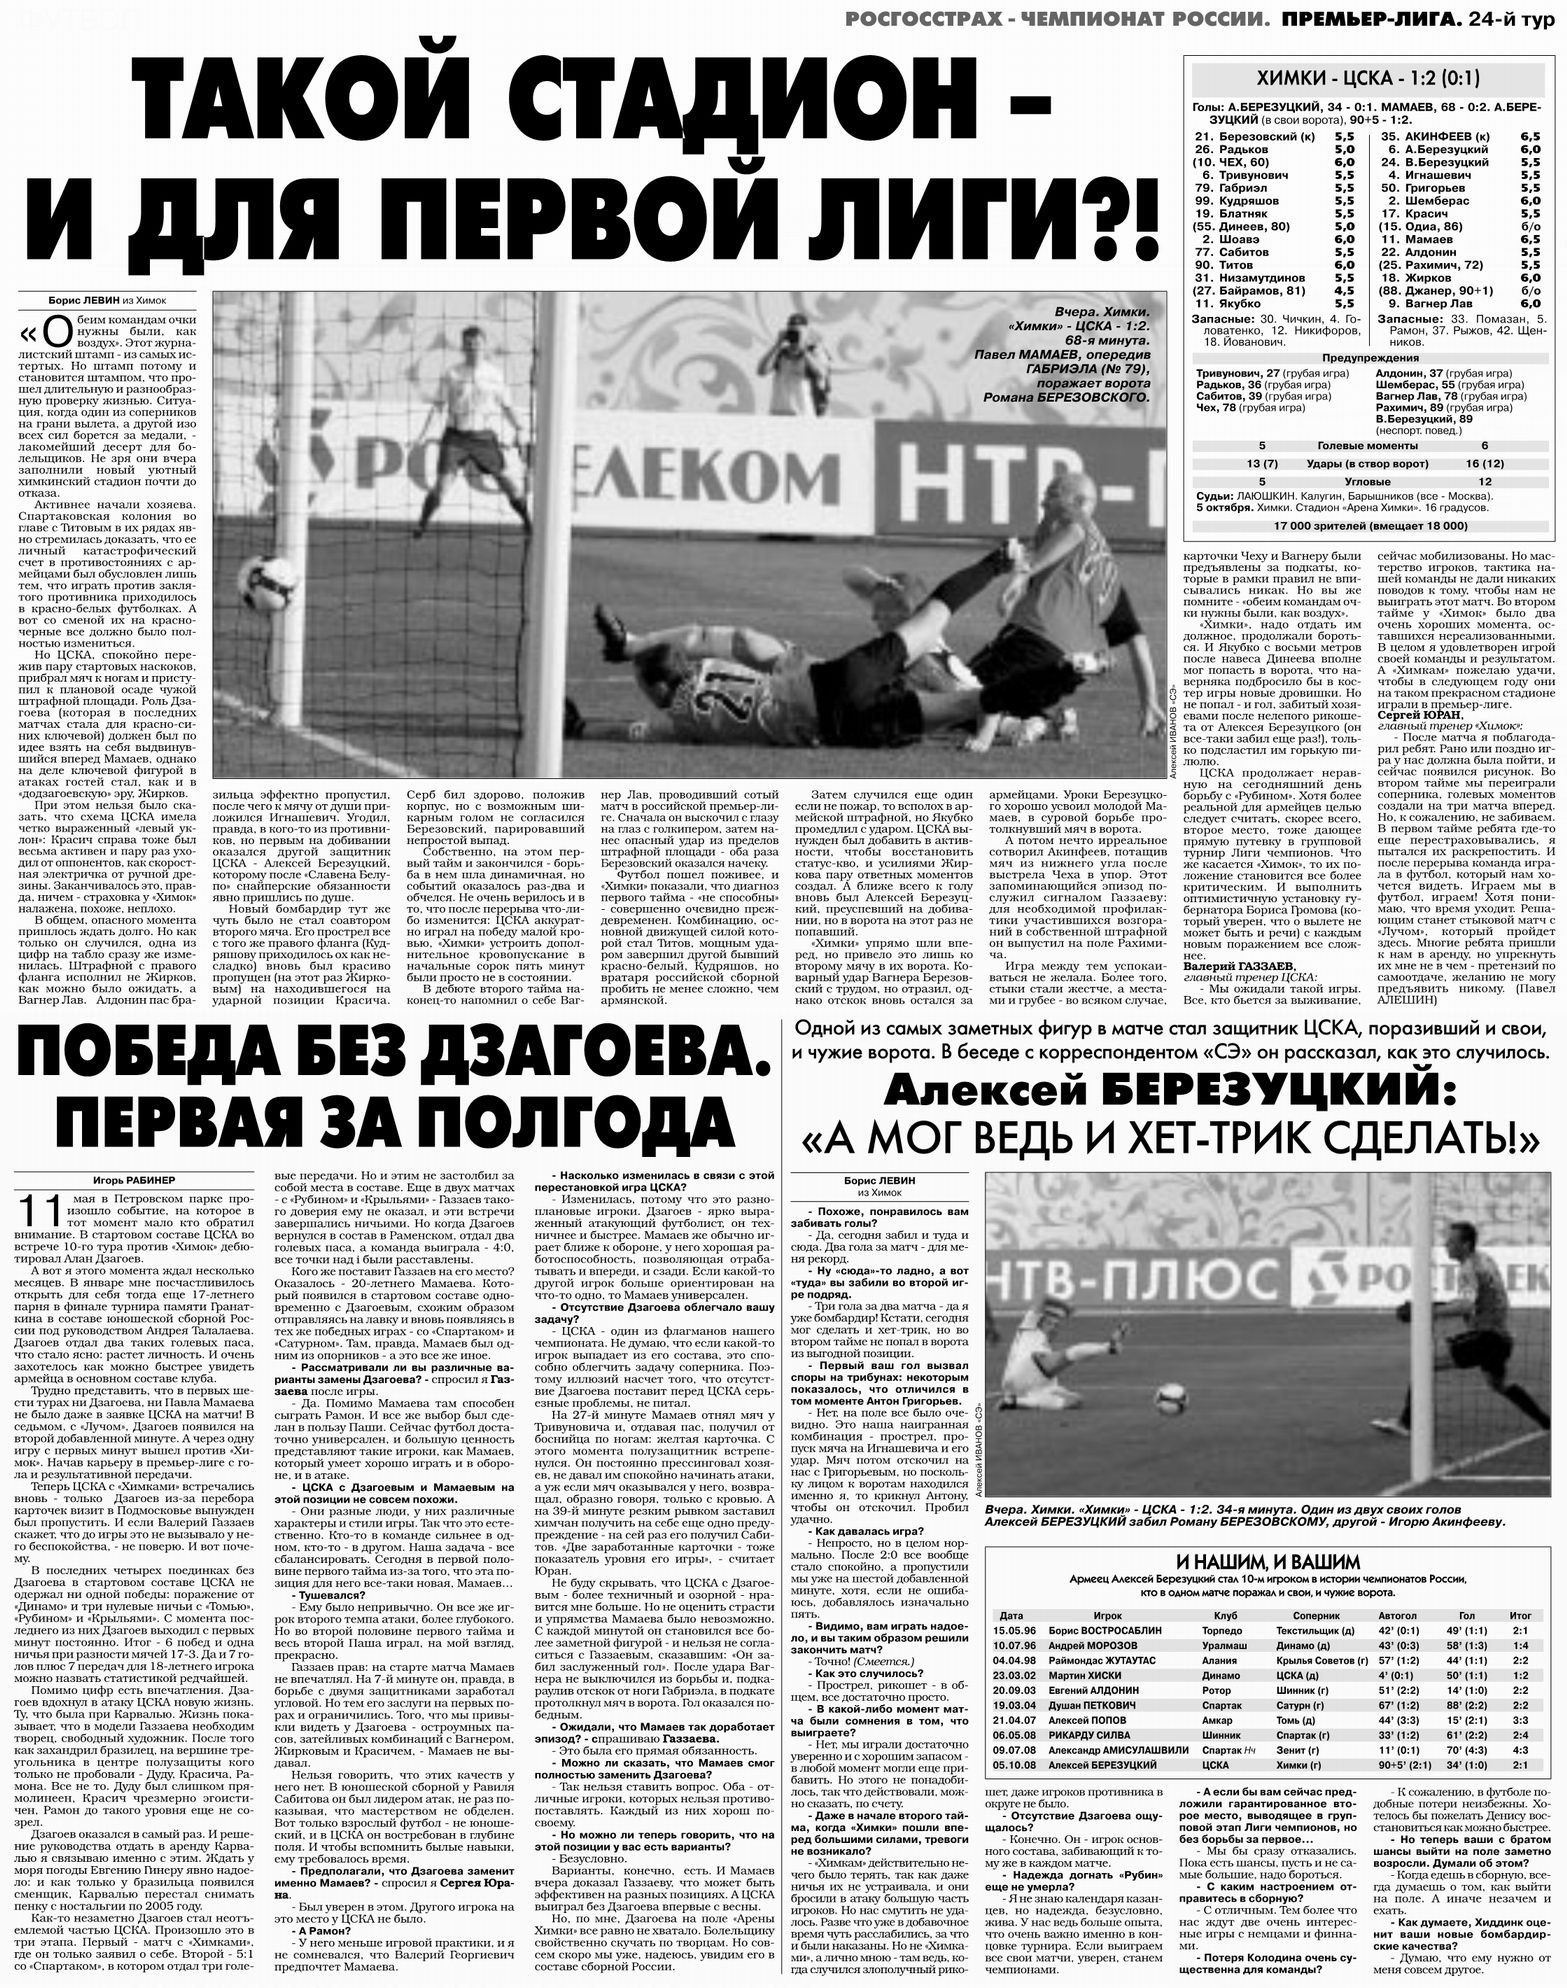 2008-10-05.Khimki-CSKA